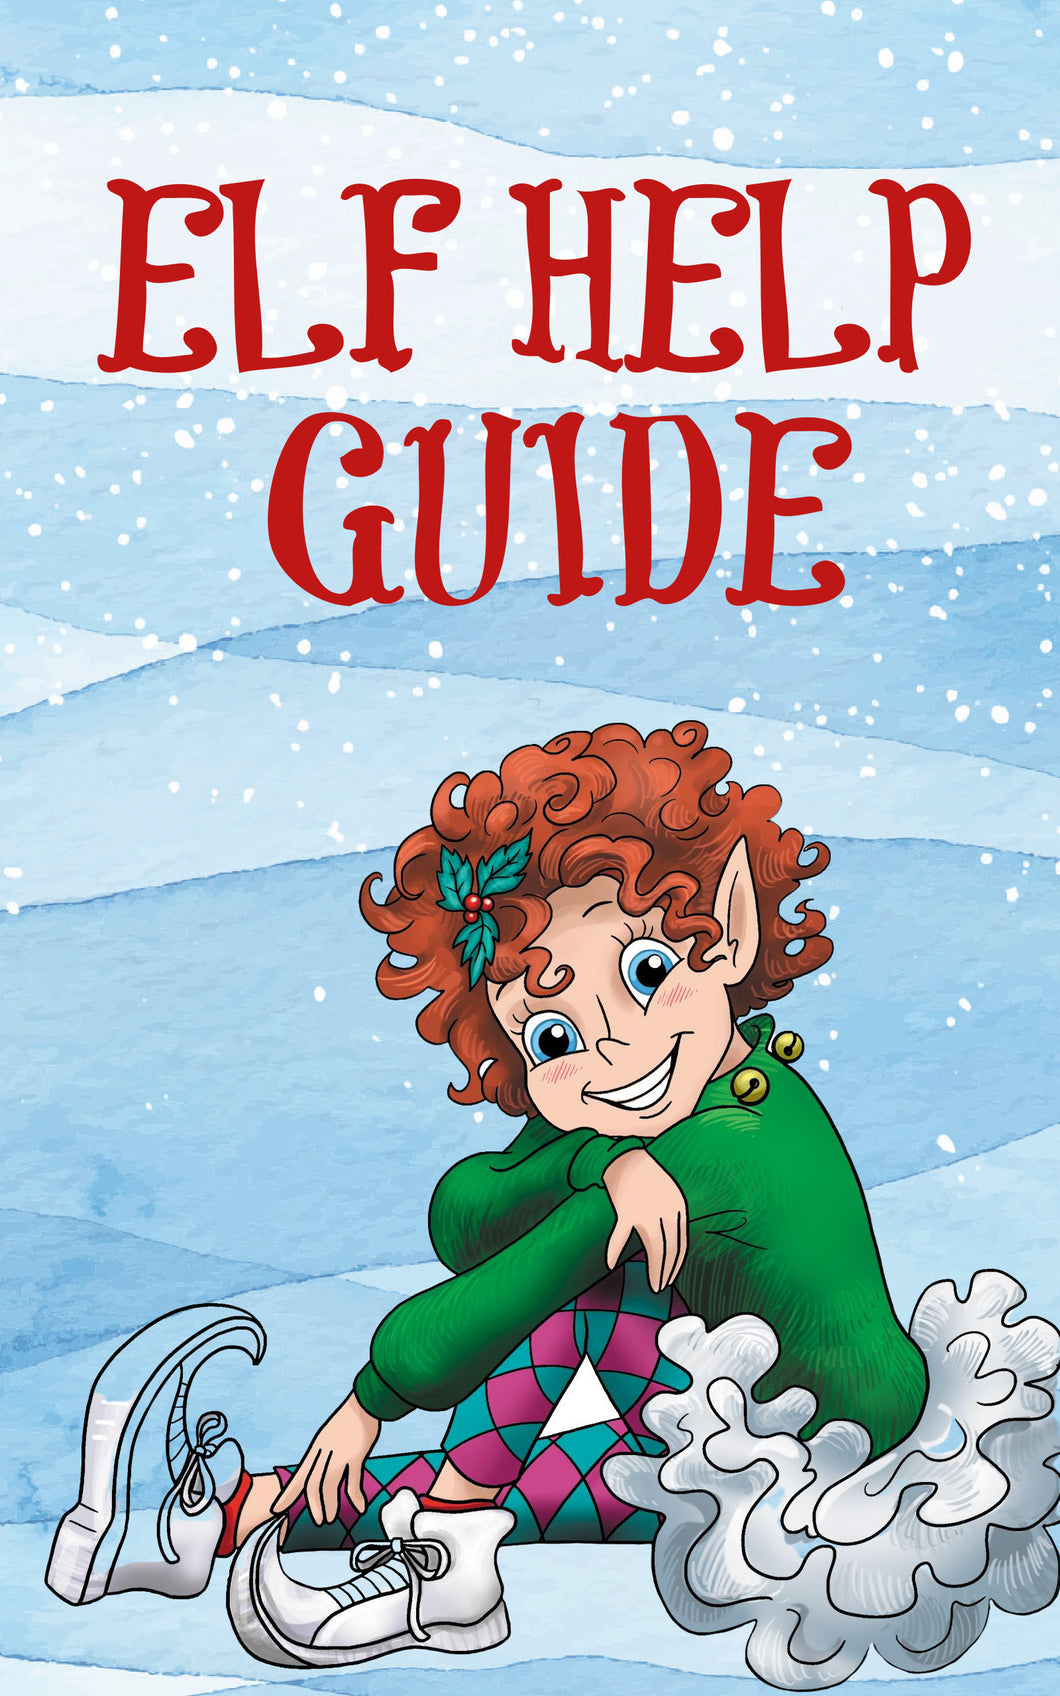 Elf Help Guide Digital Download